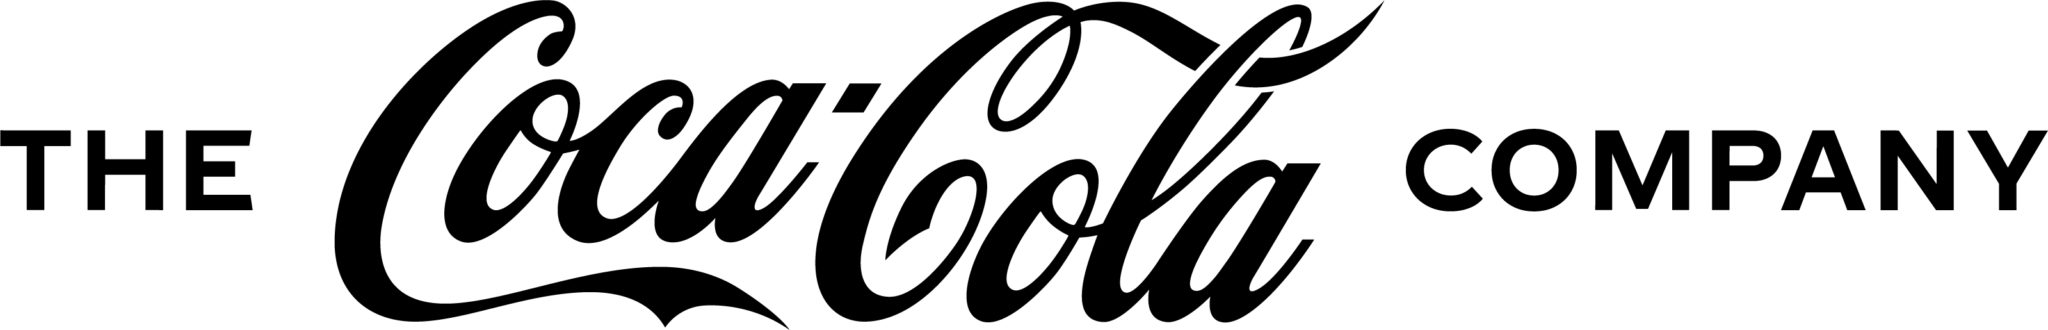 The Coca-Cola Company Mark_Secondary_Logo_Black